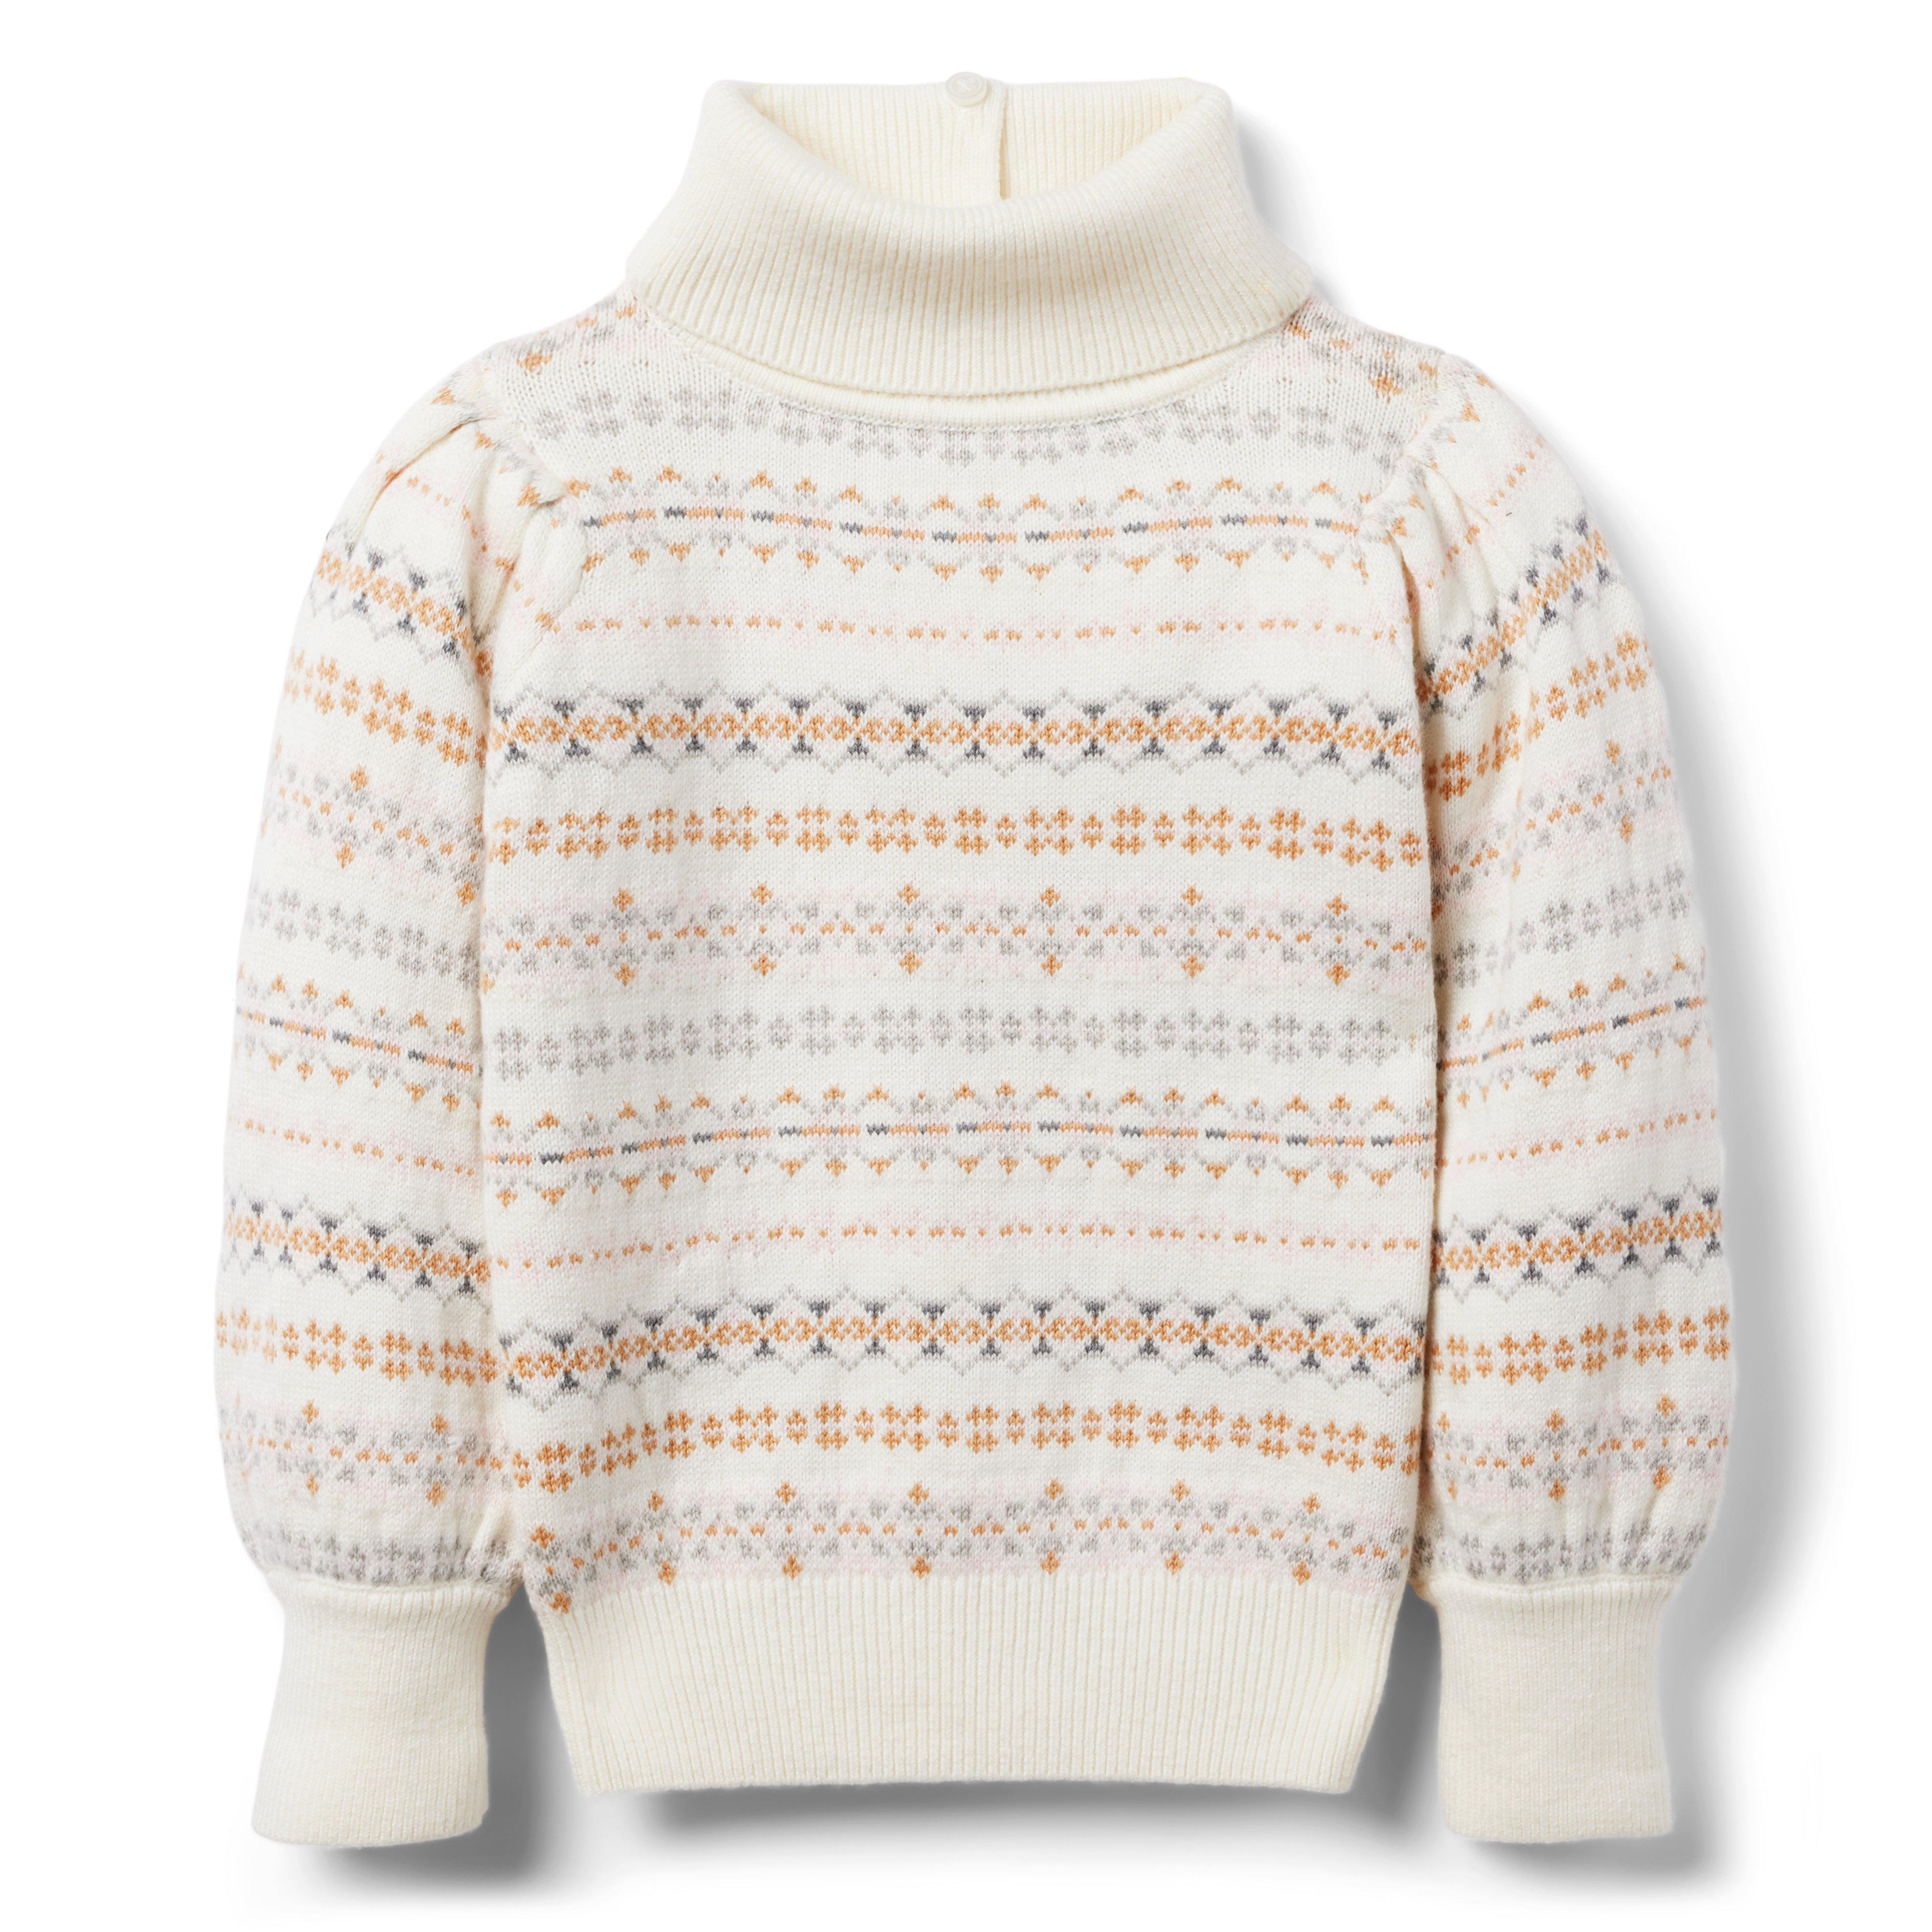 The Fair Isle Turtleneck Sweater 